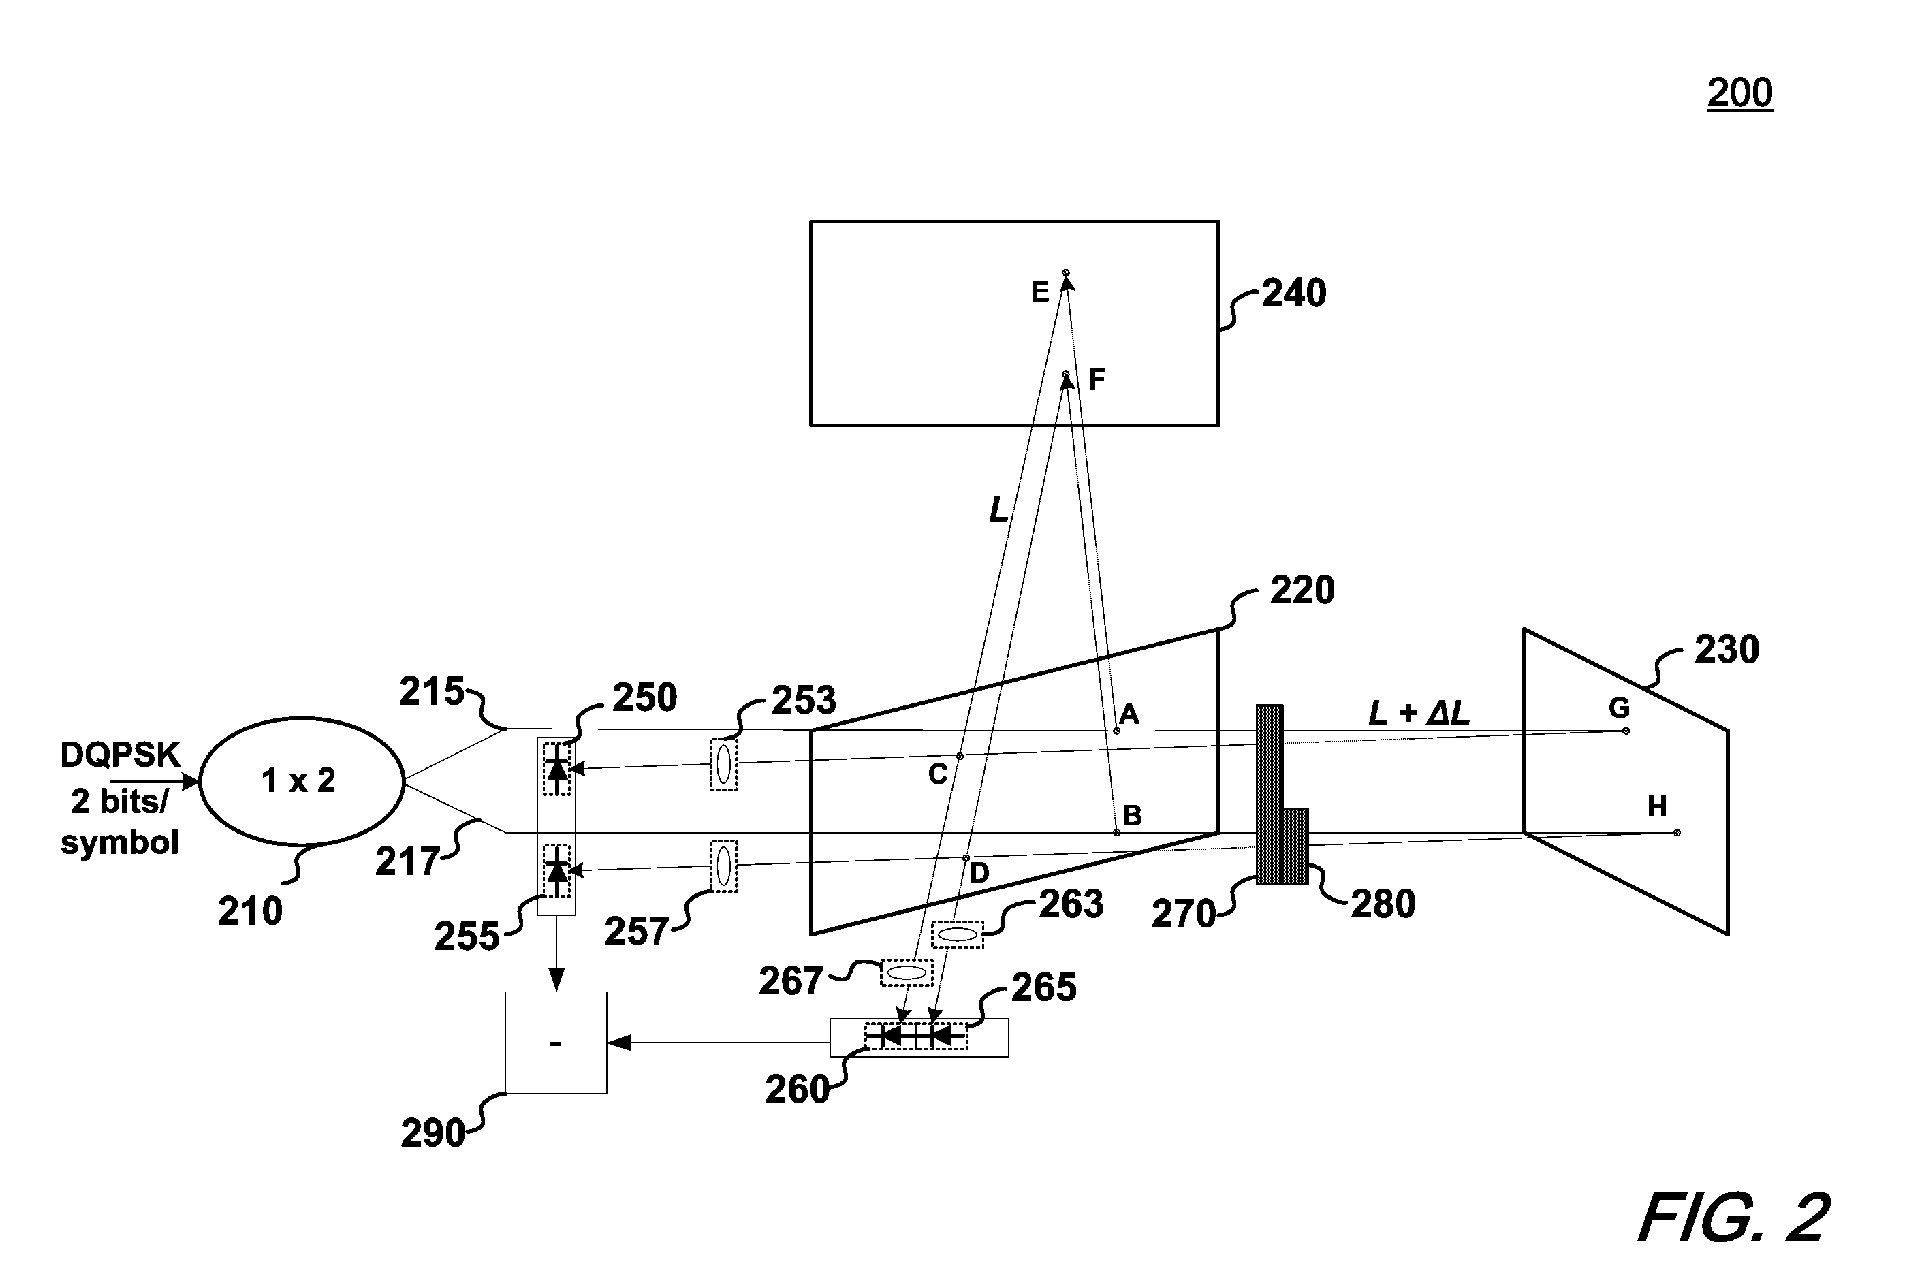 Optical demodulating apparatus and method